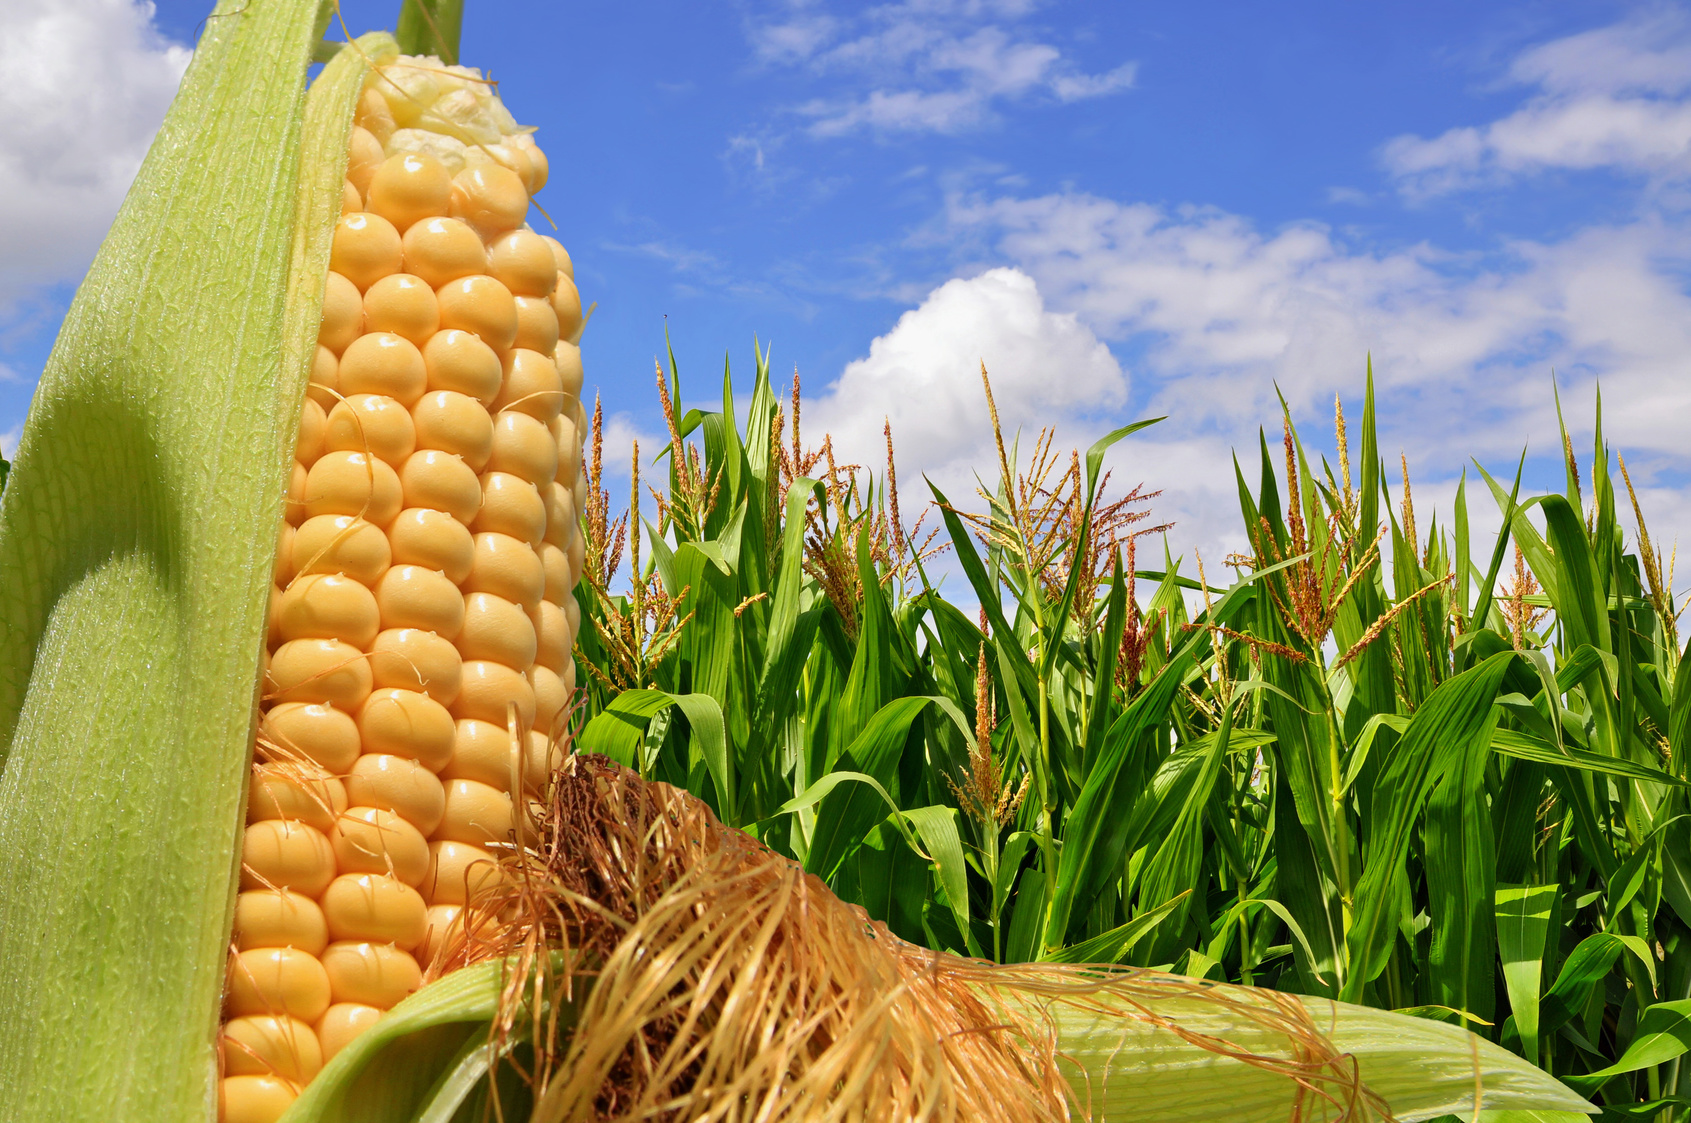 teaser image of corn in cornfield